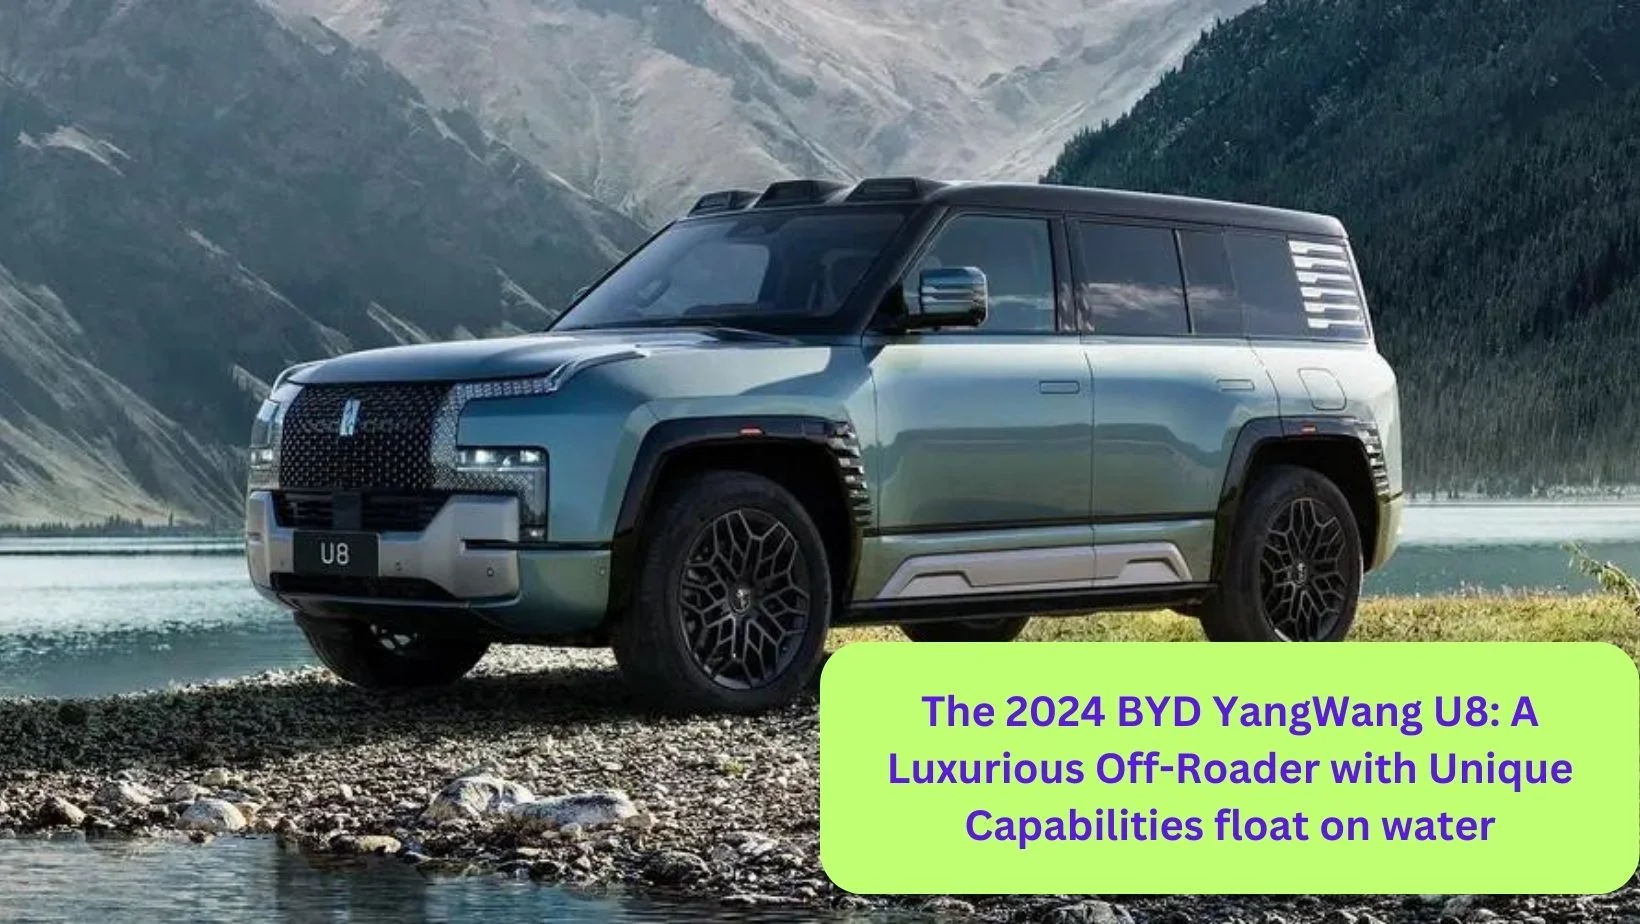 Move Over, Land Cruiser: The 2024 BYD YangWang U8 Redefines Luxury Off-Roading